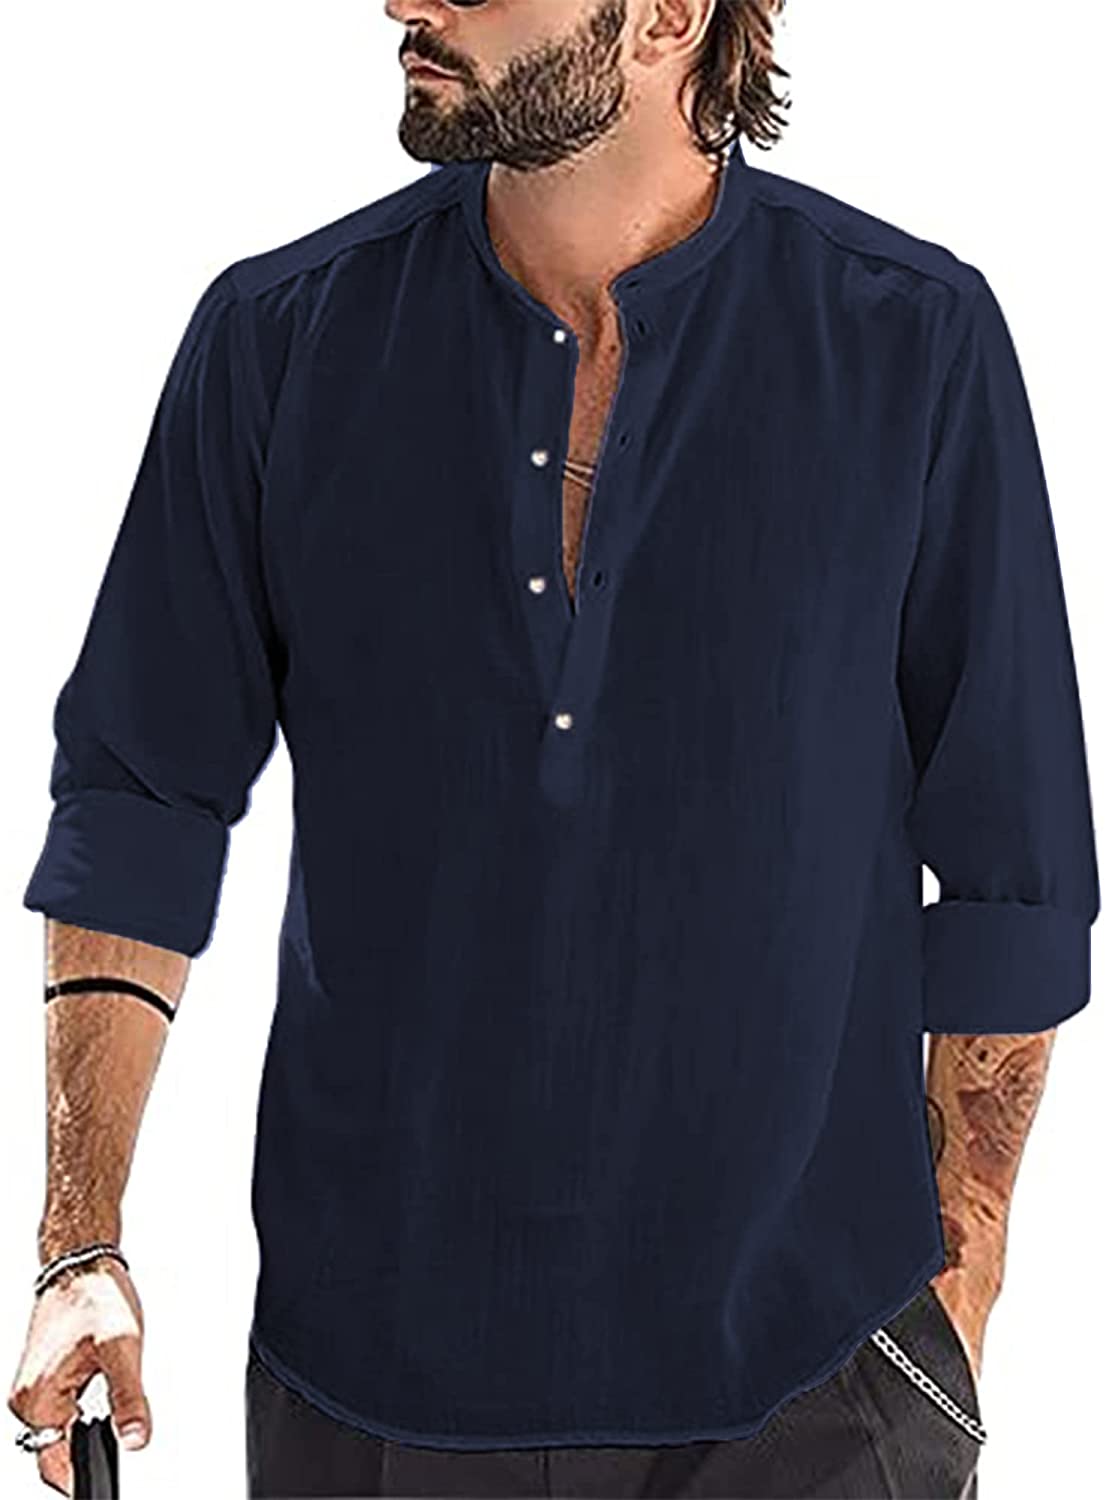 YAOBAOLE Mens Casual Cotton Linen Henley T-Shirts Long Sleeve Regular Fit Beach Vacation Shirt 